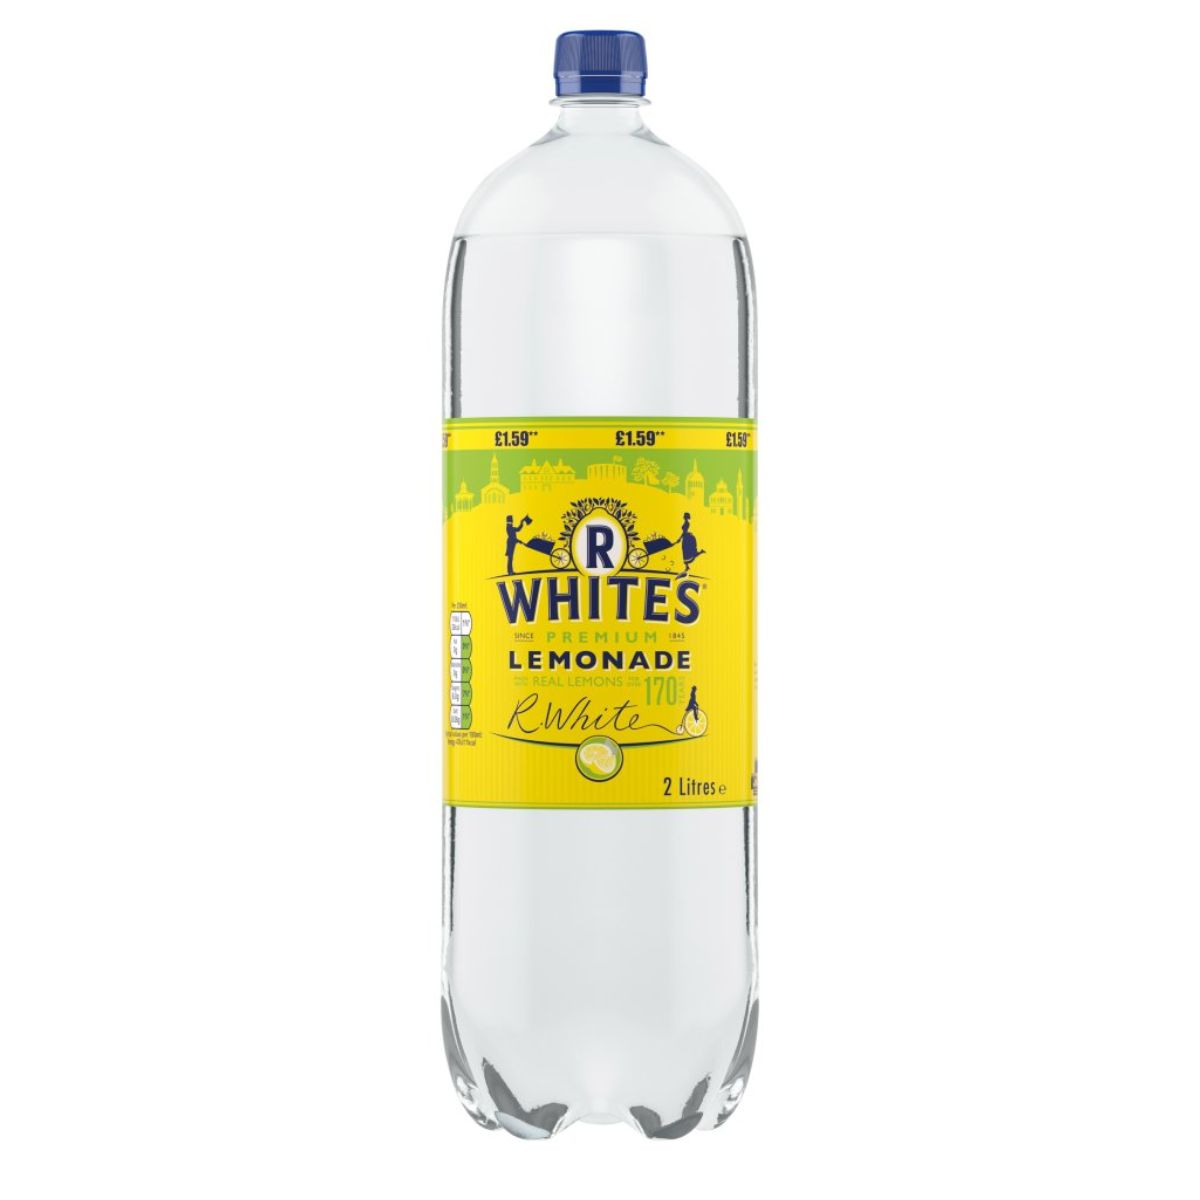 A bottle of R Whites - Premium Lemonade - 2L on a white background.